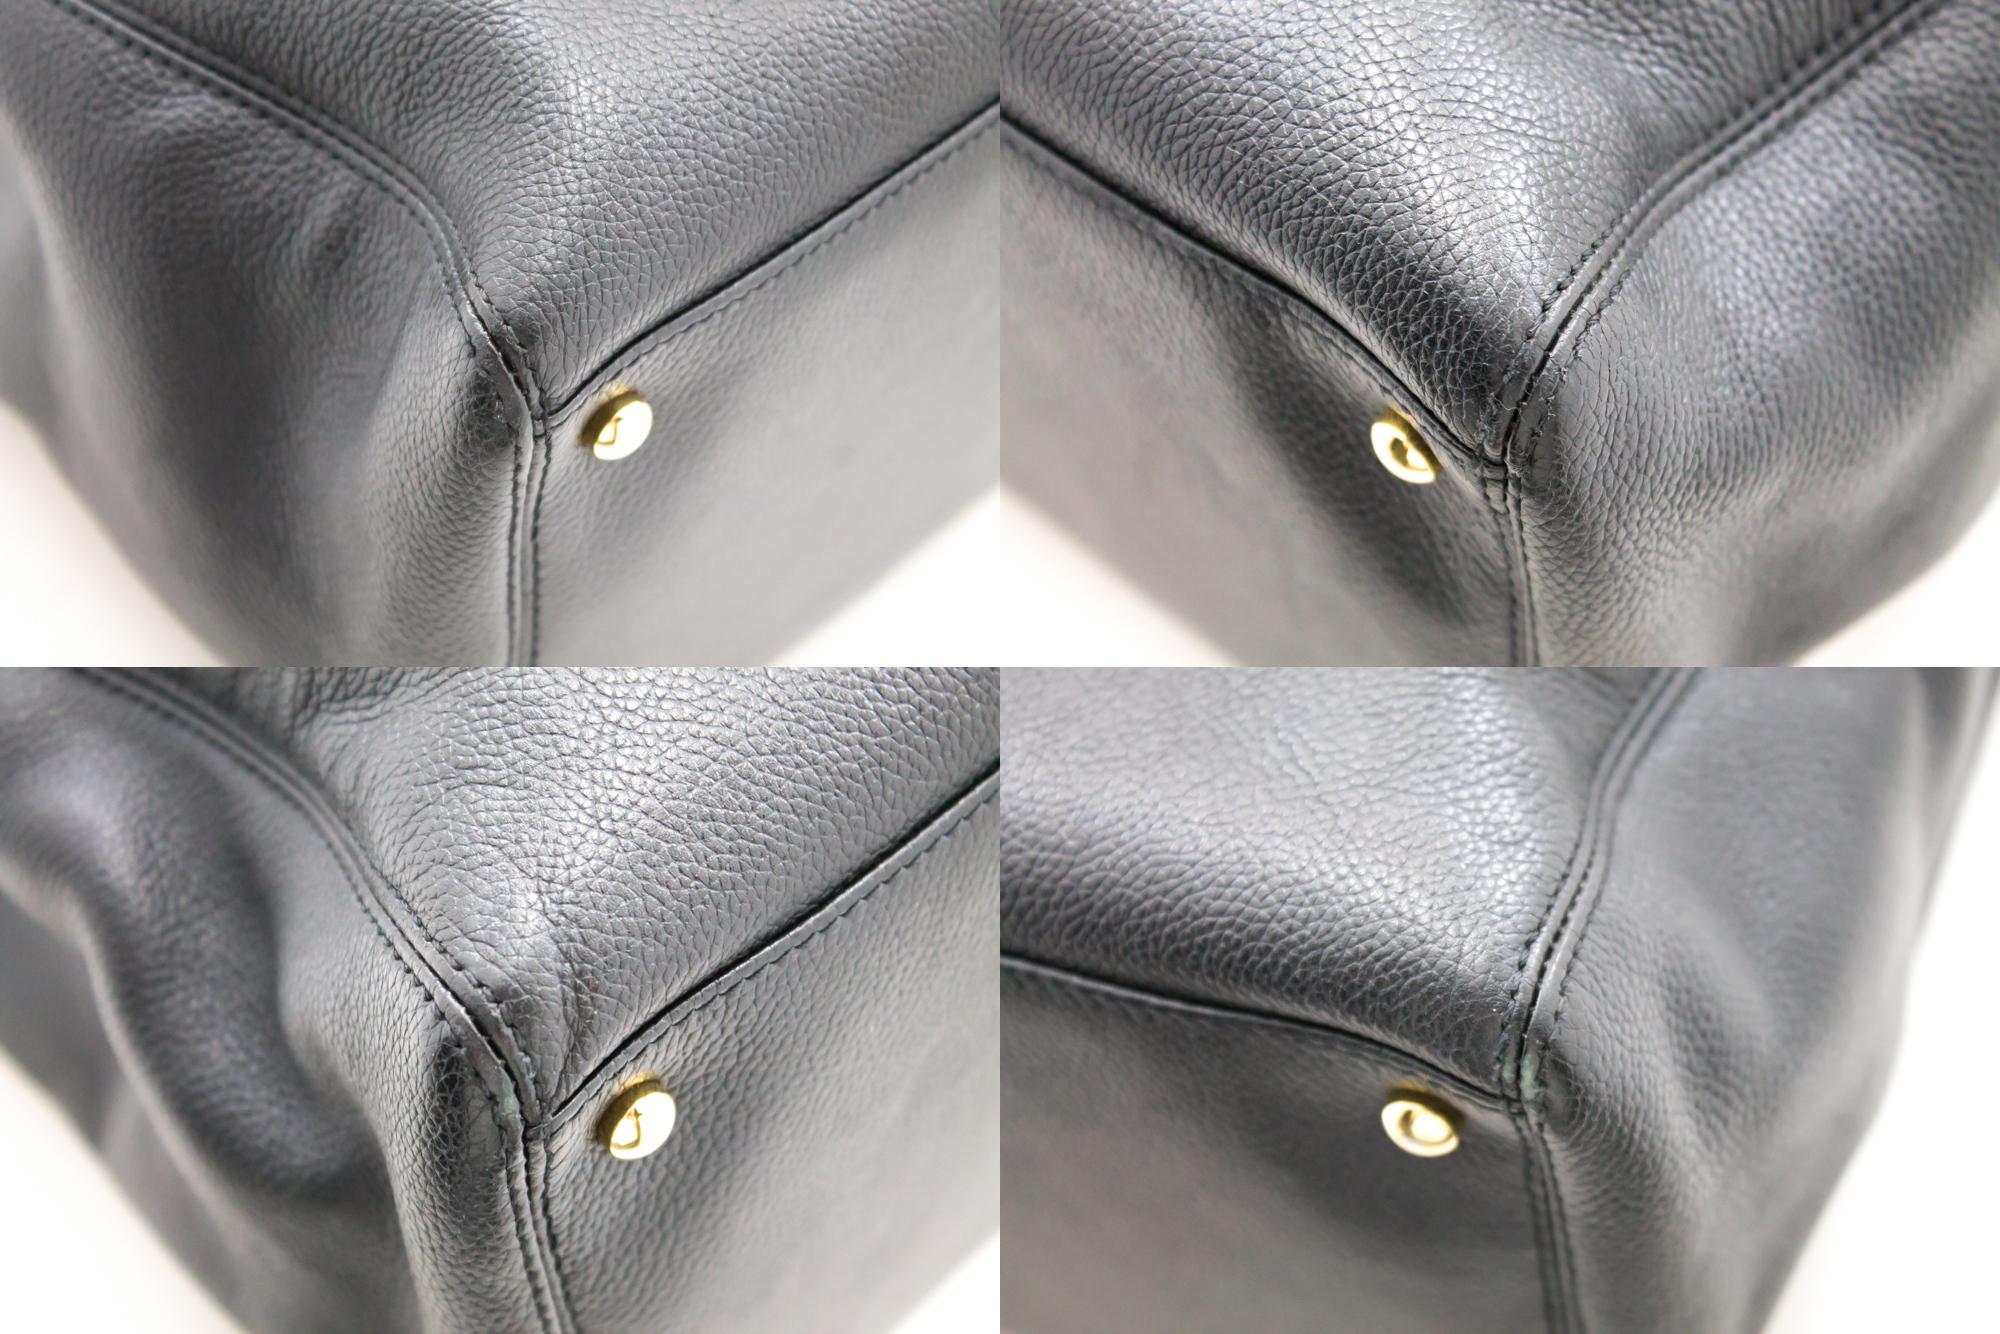 CHANEL Executive Tote Caviar Shoulder Bag Handbag Black Gold Strap 1